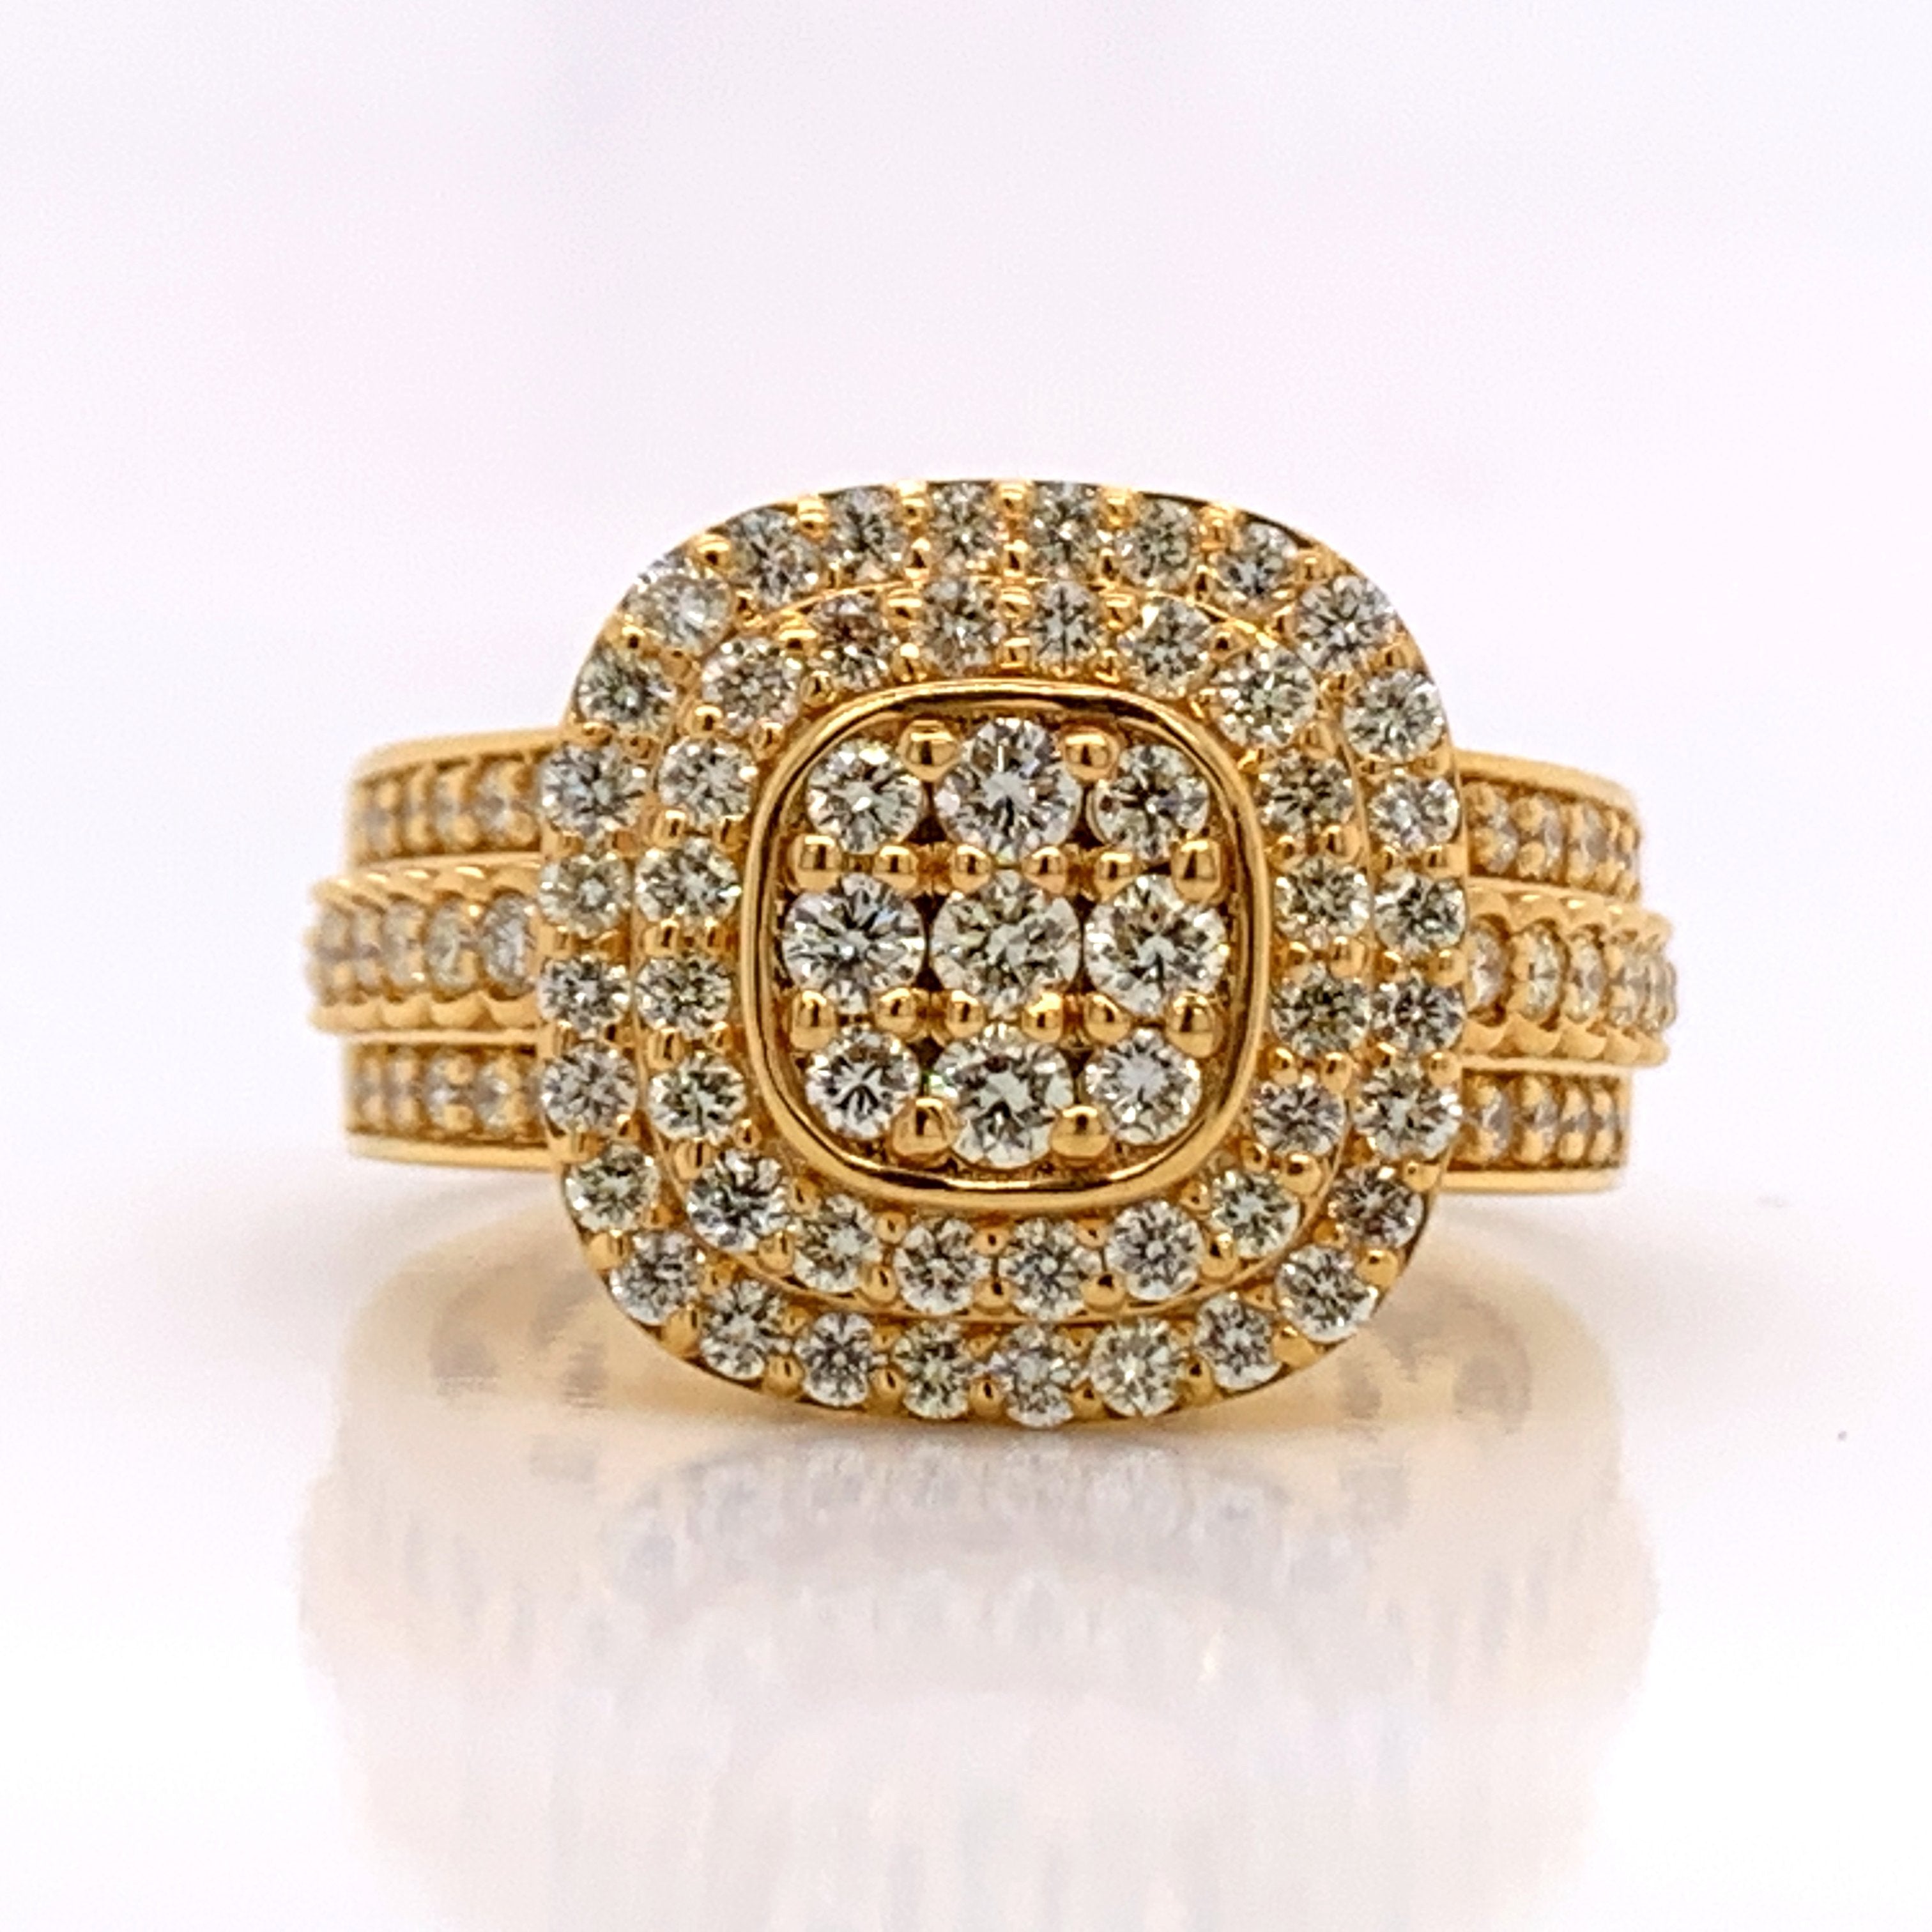 1.78CT Diamond 10K Gold Ring - White Carat Diamonds 